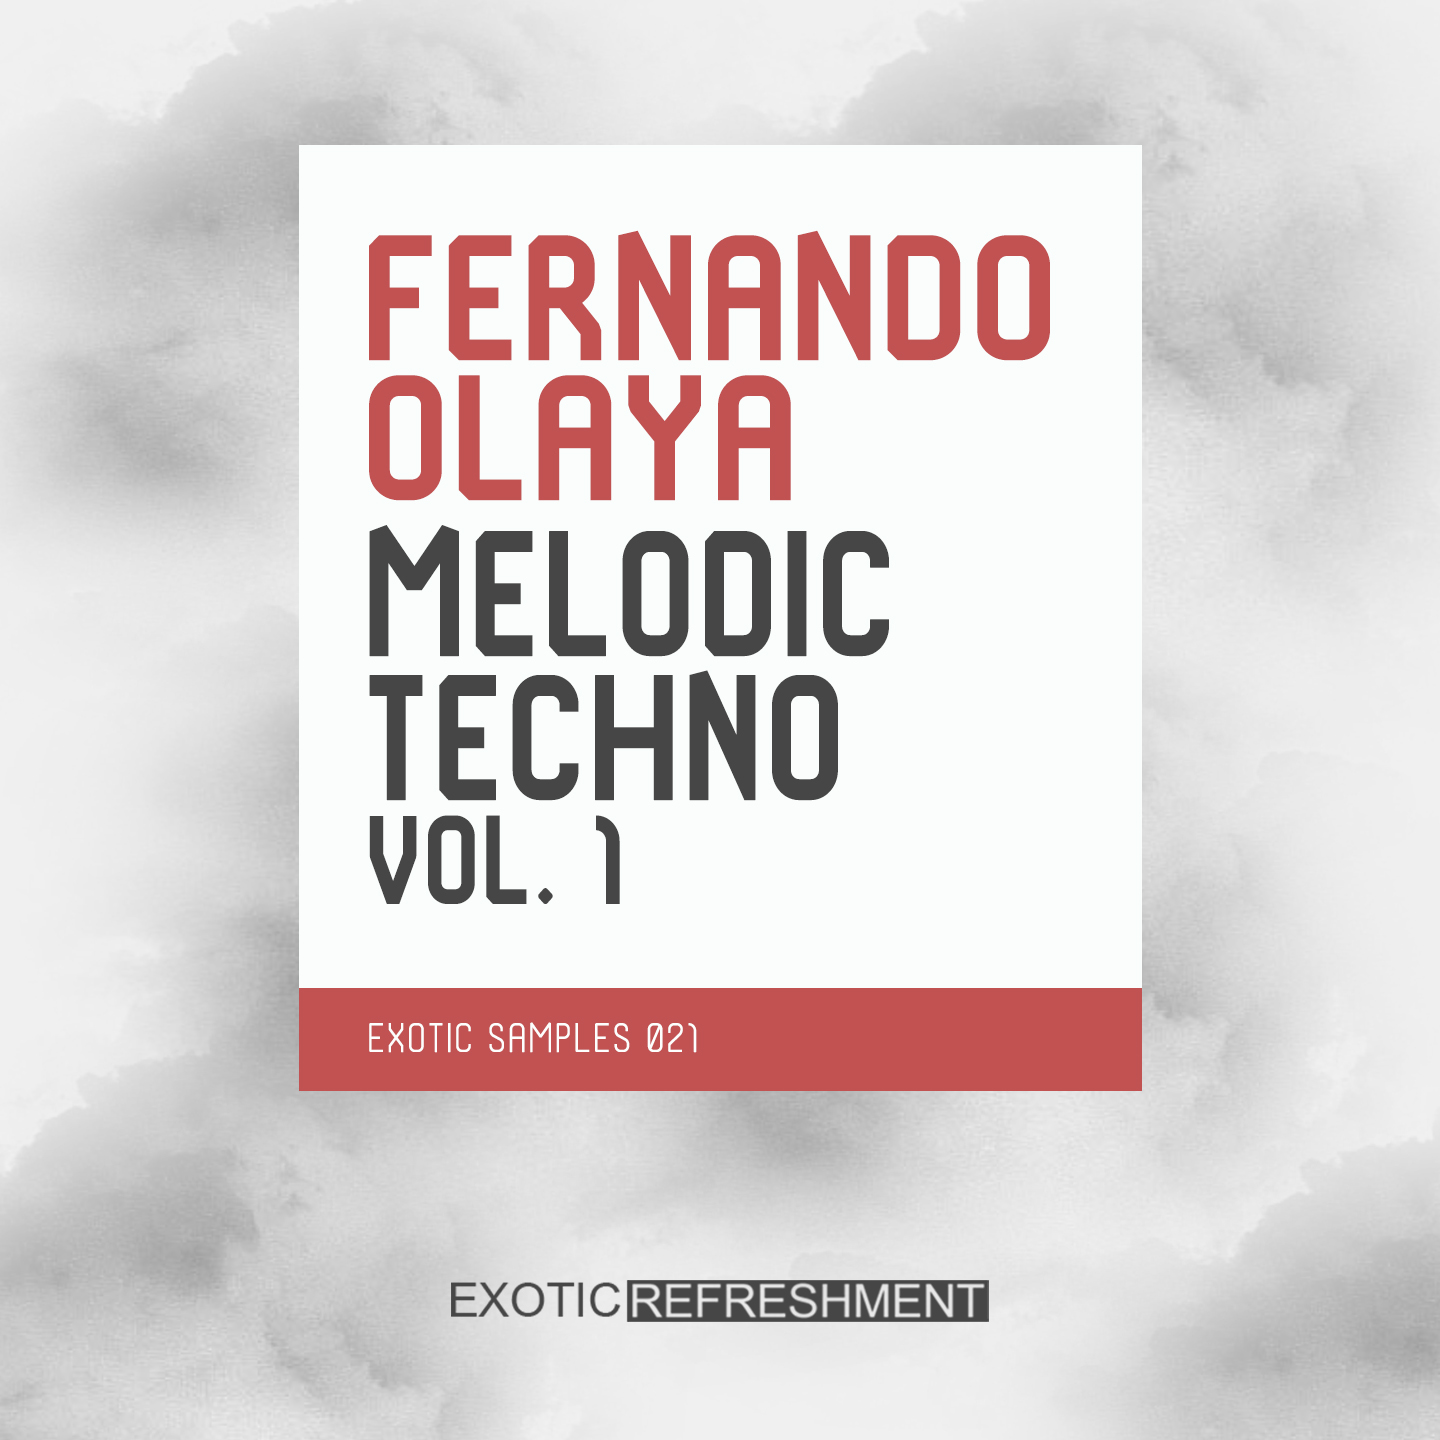 Fernando Olaya Melodic Techno Vol. 1